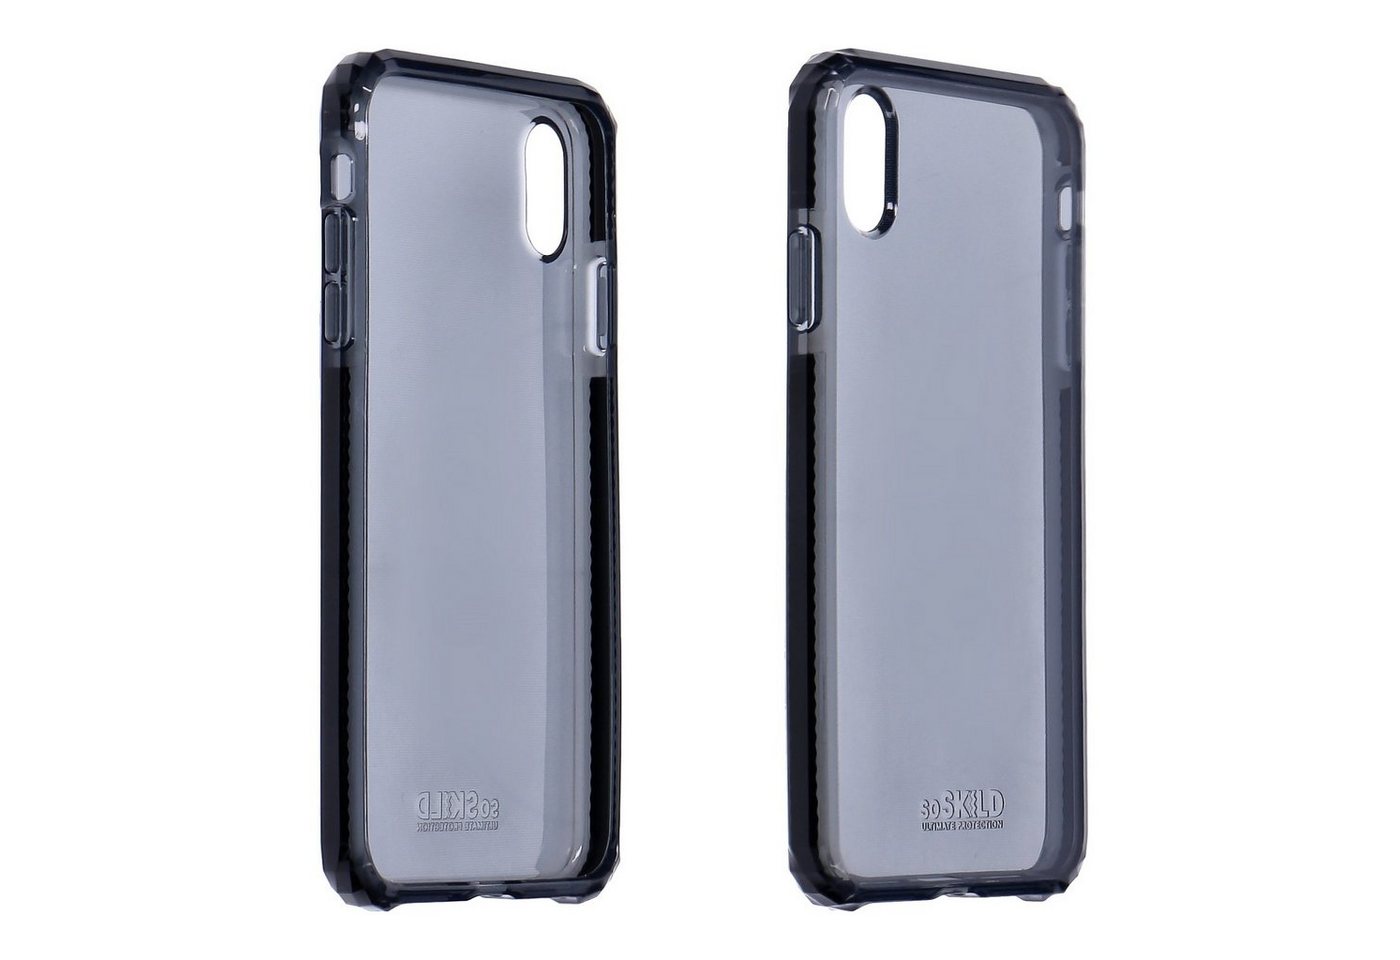 SoSkild Handyhülle Defend Case + Crystal Glass iPhone Xs Max grau von SoSkild